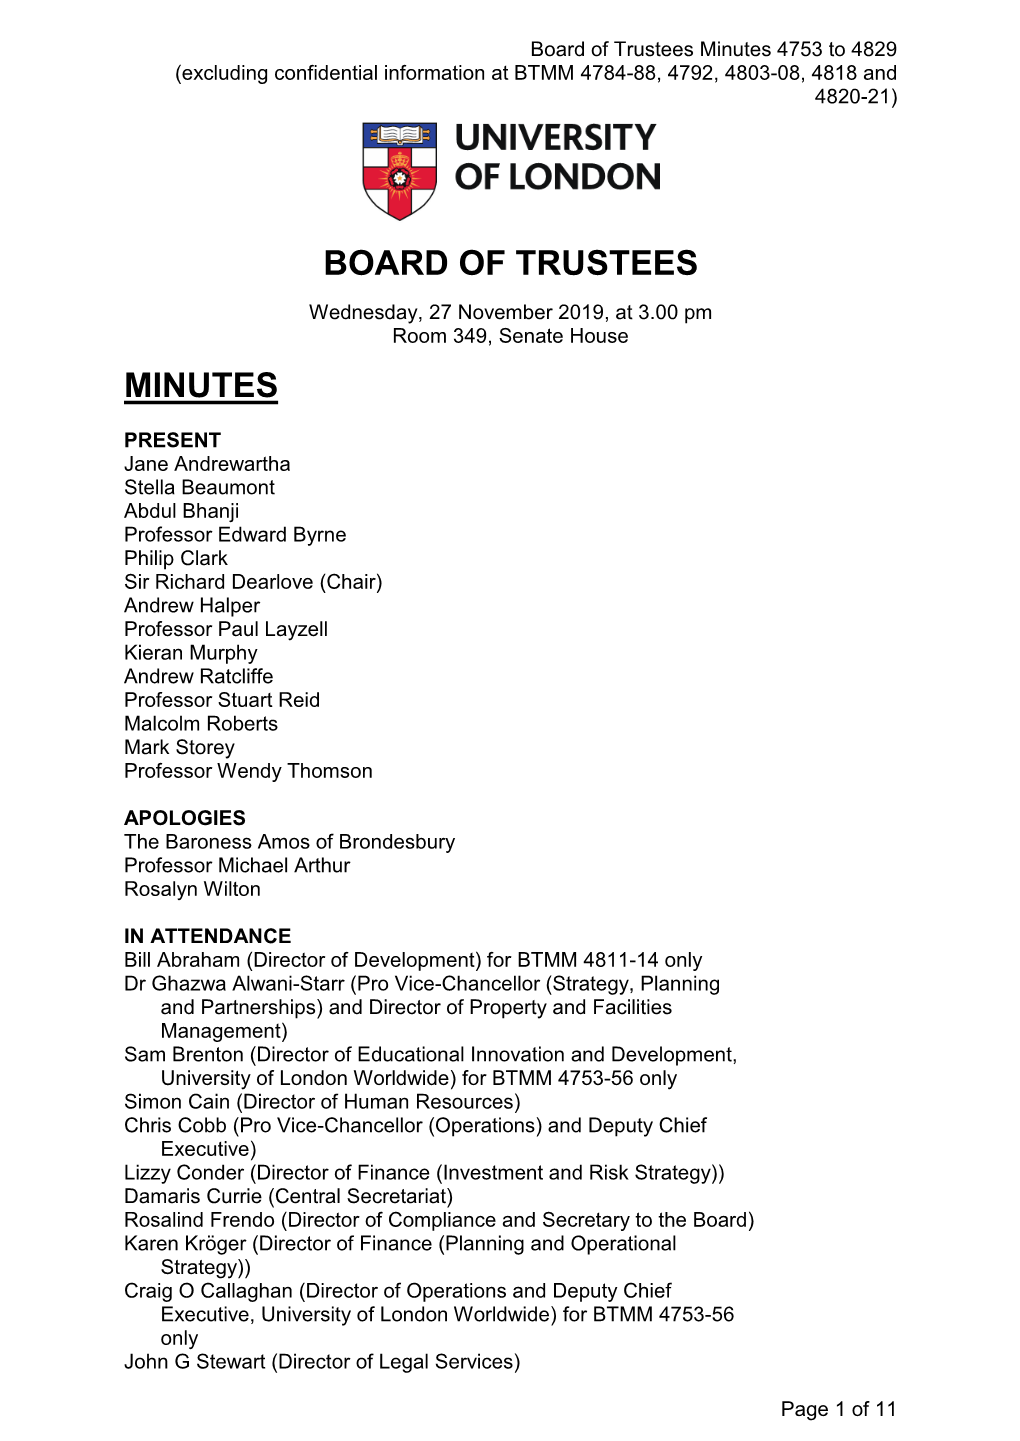 Board of Trustees Minutes November 2019